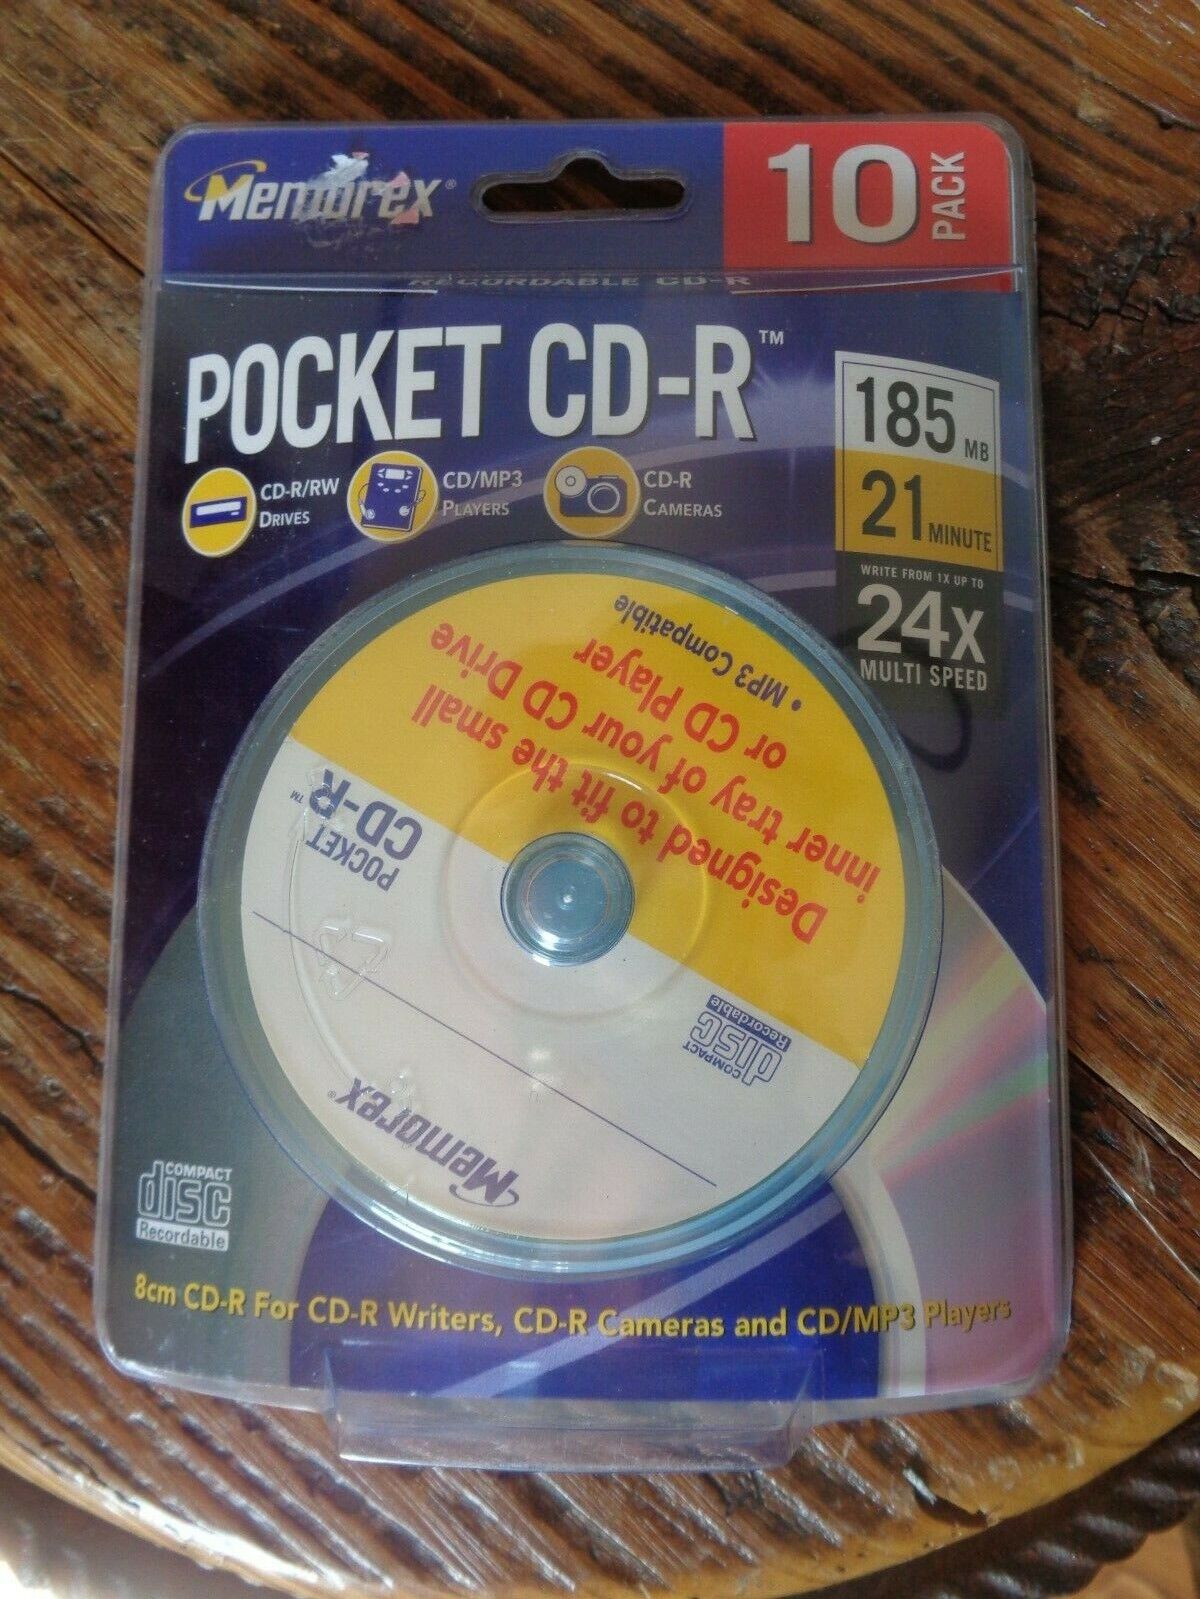 Memorex 185MB/21-Minute 24X Multi Pocket CD-R Media (10-Pack) (Discontinued)